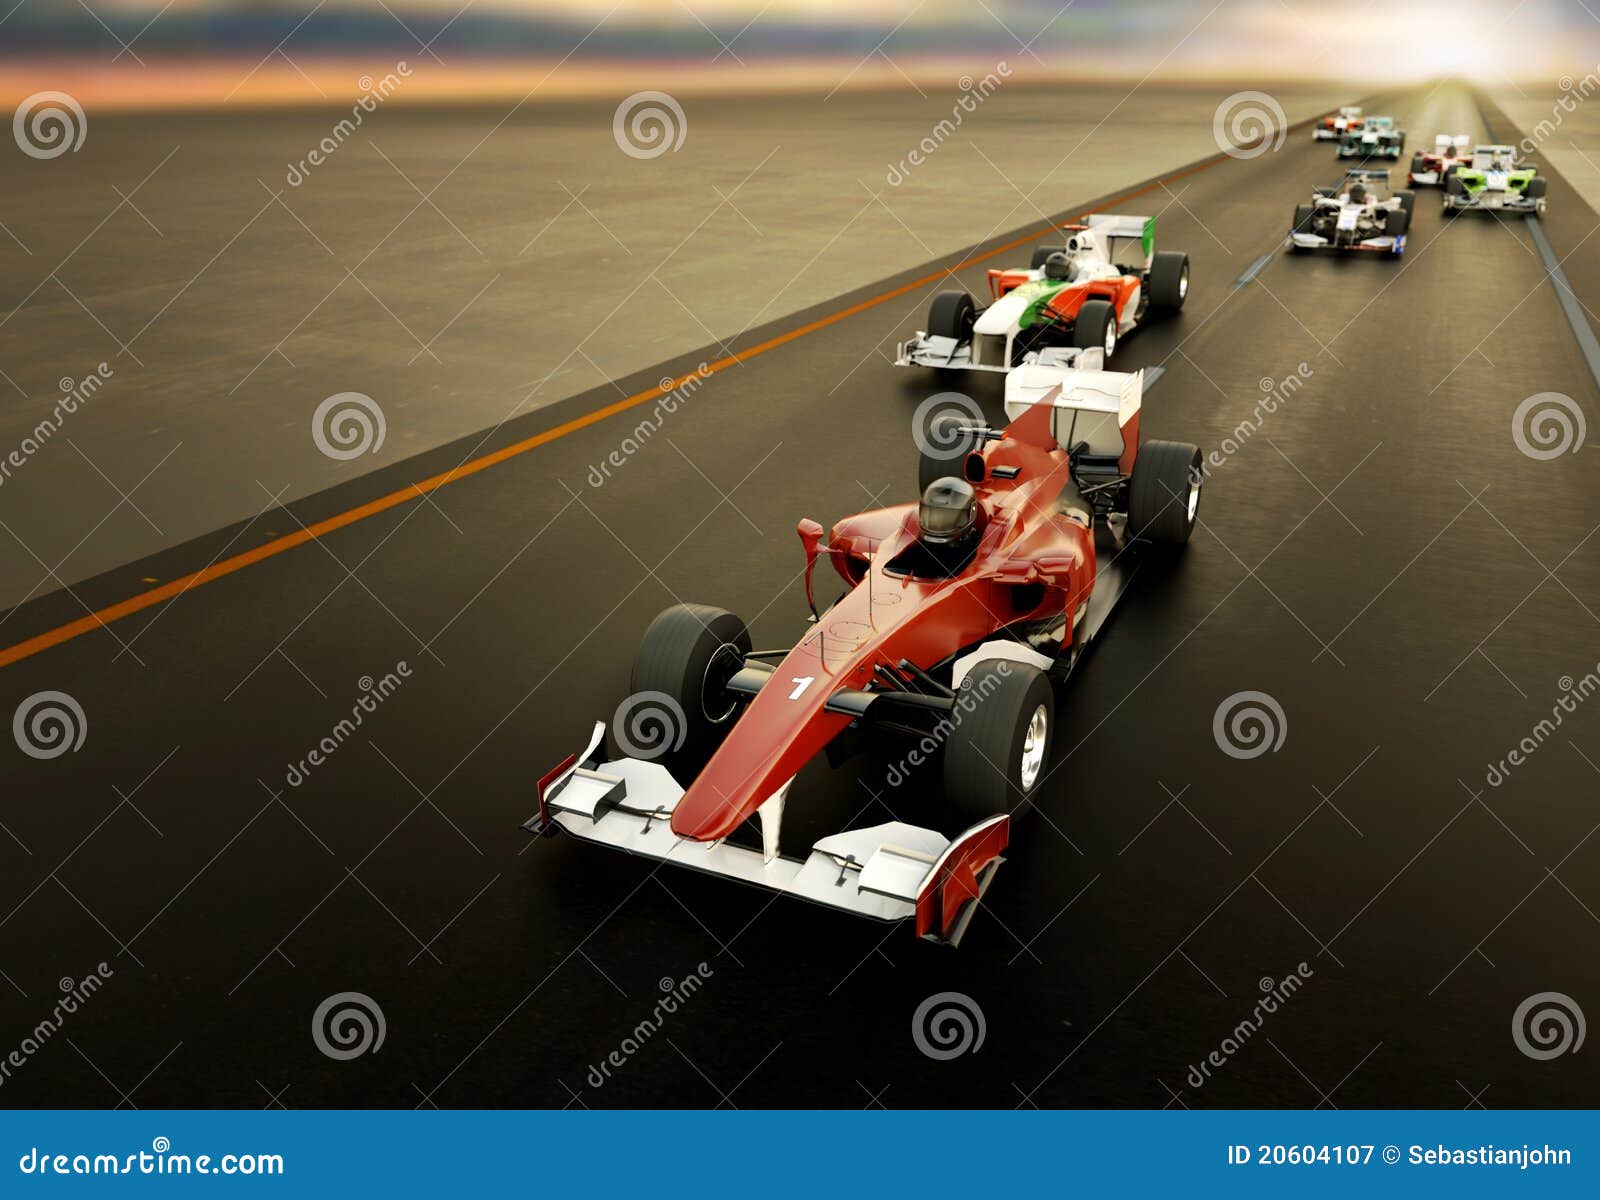 F1 Racing stock image